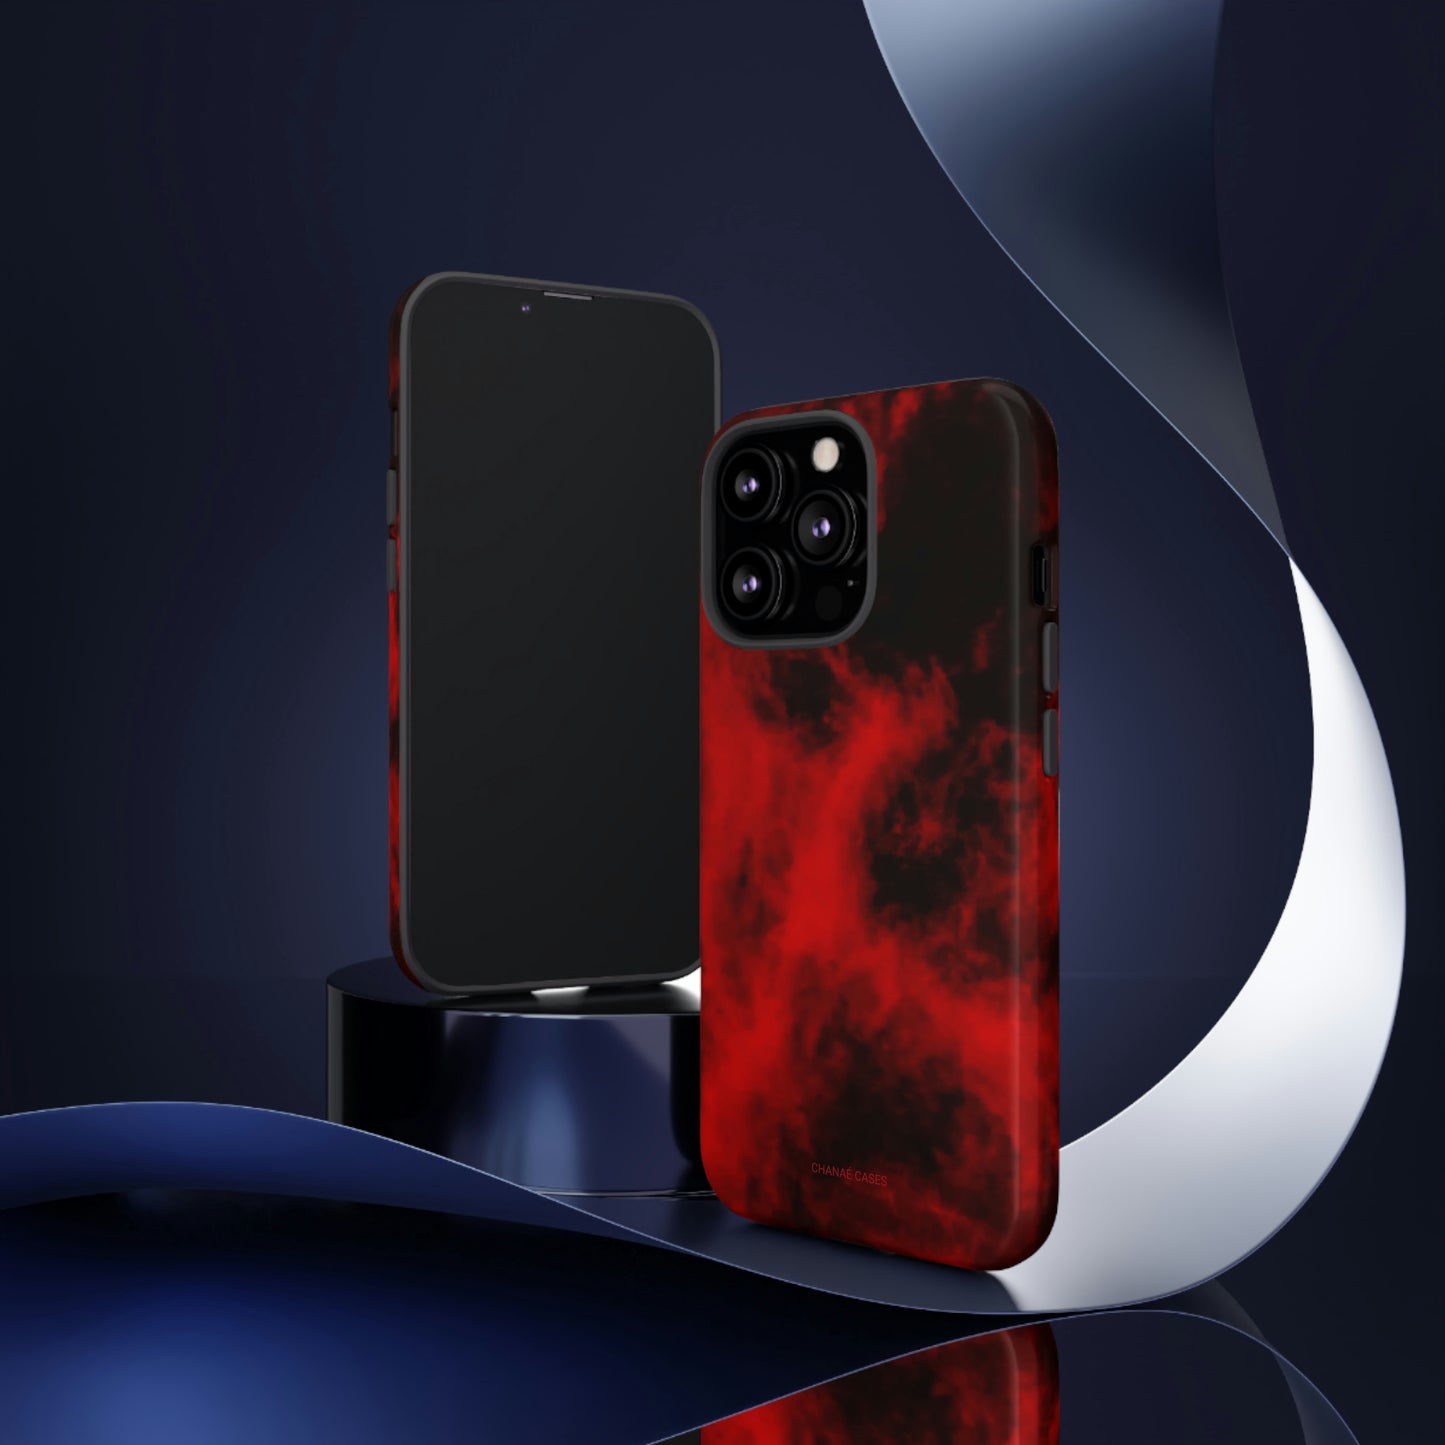 Fury iPhone "Tough" Case (Red/Black)